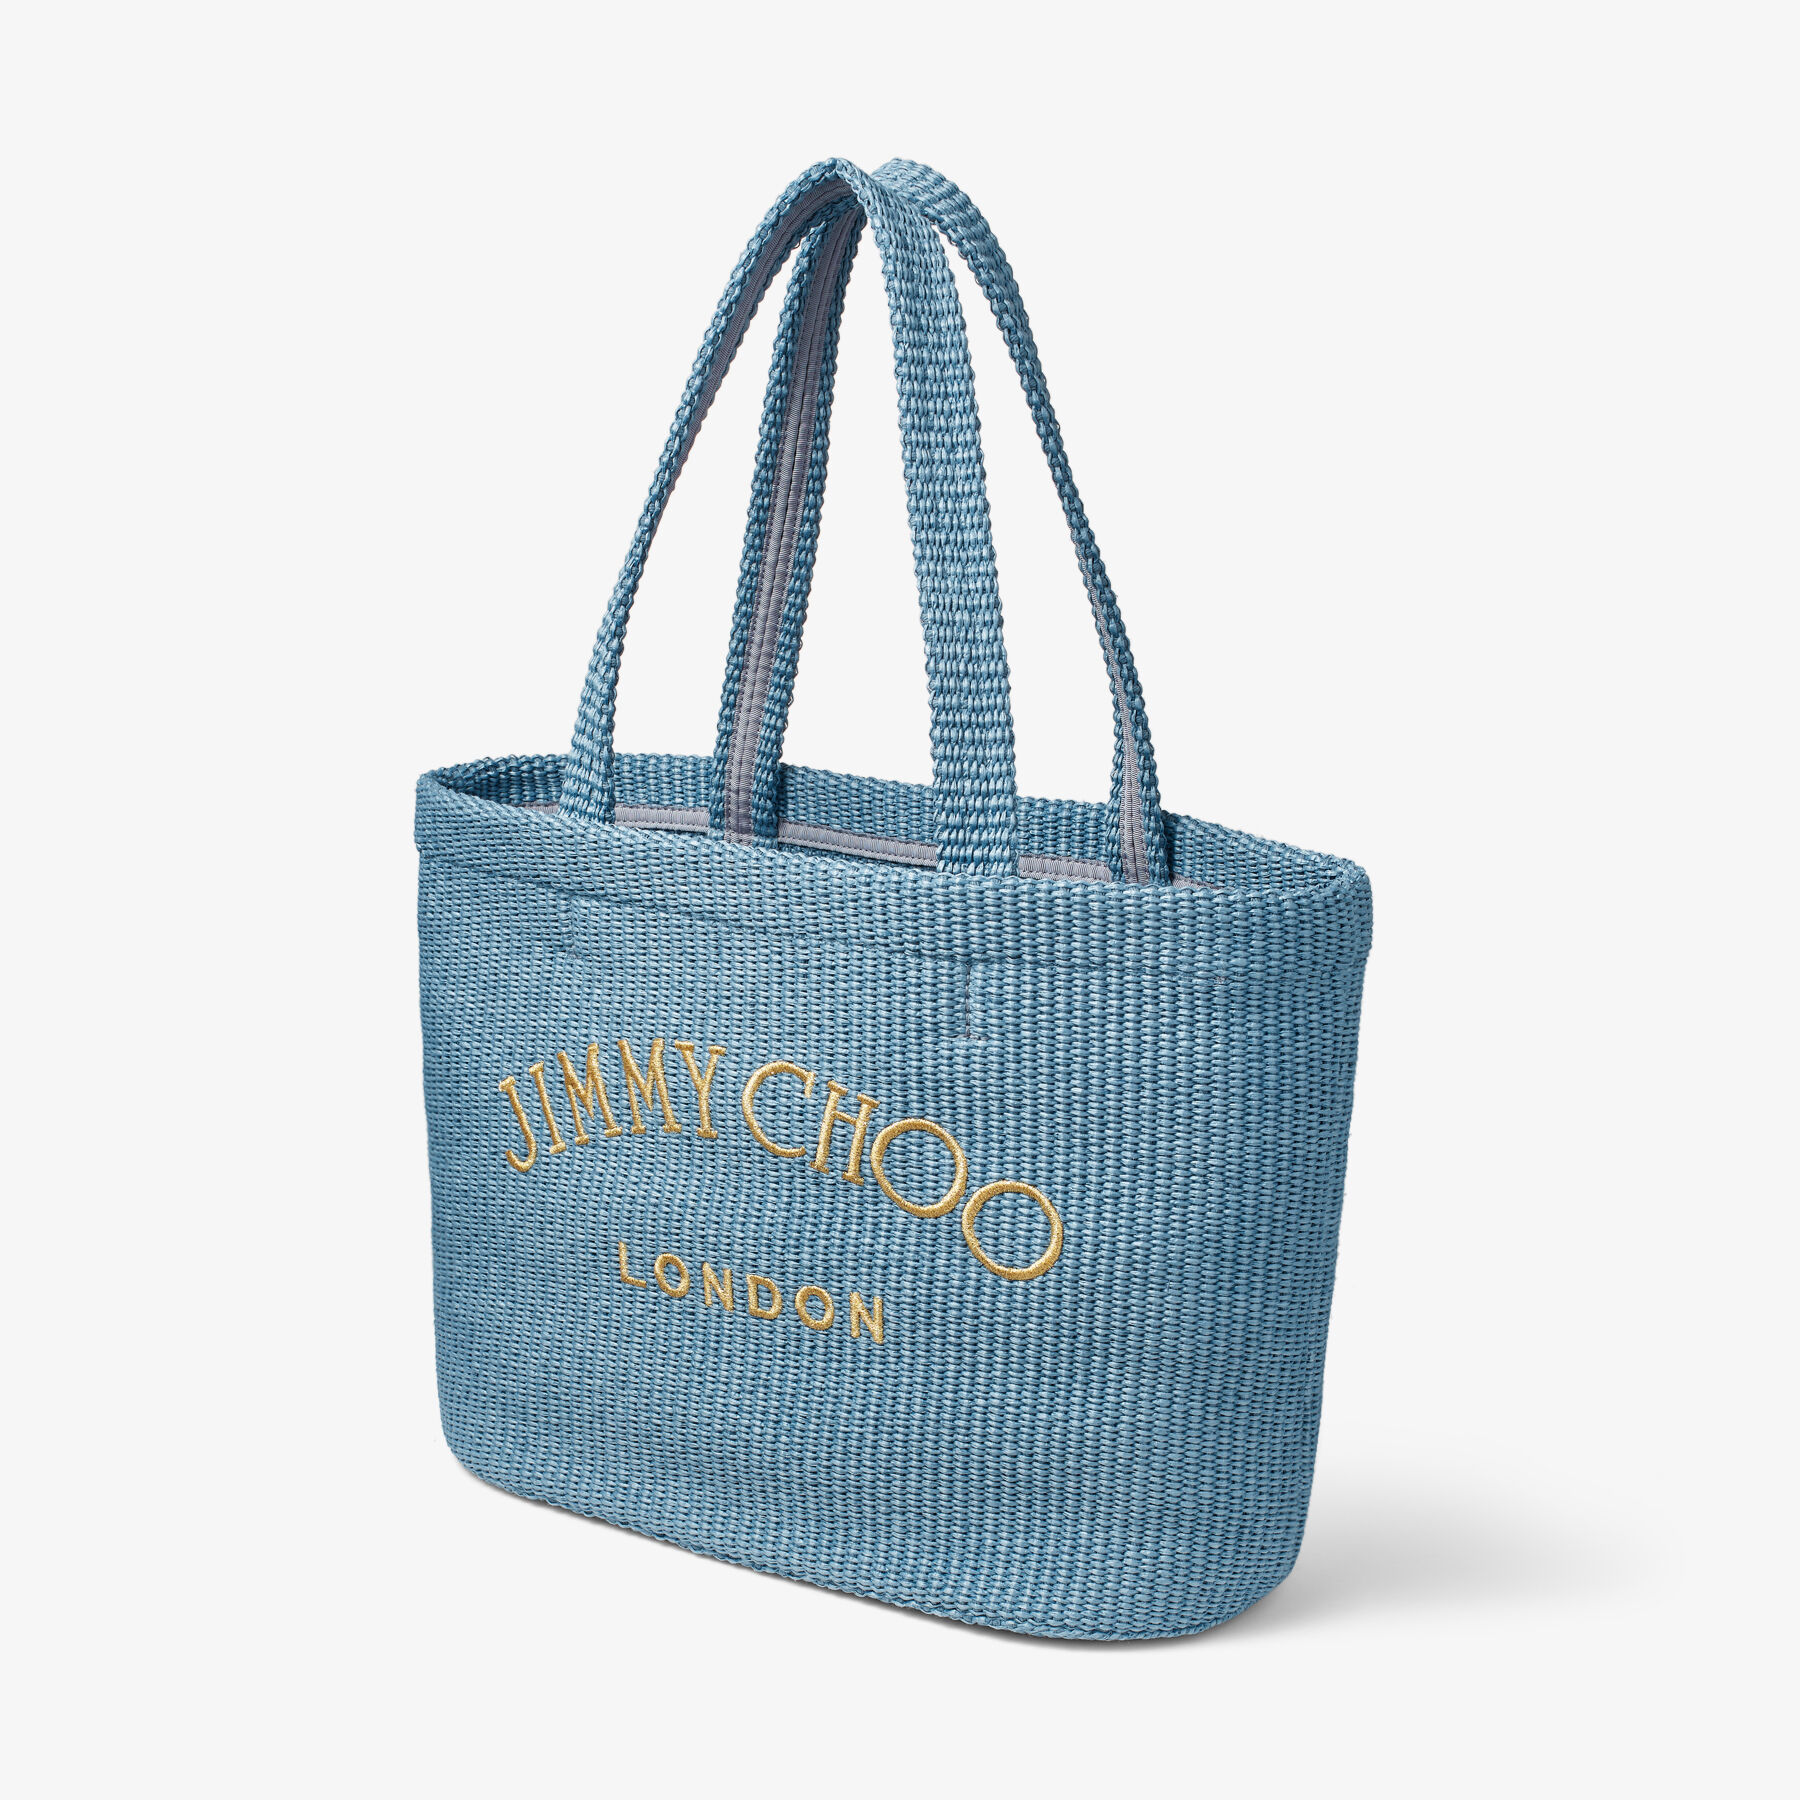 Smoky Blue Raffia Tote Bag with Jimmy Choo Embroidery | BEACH TOTE ...